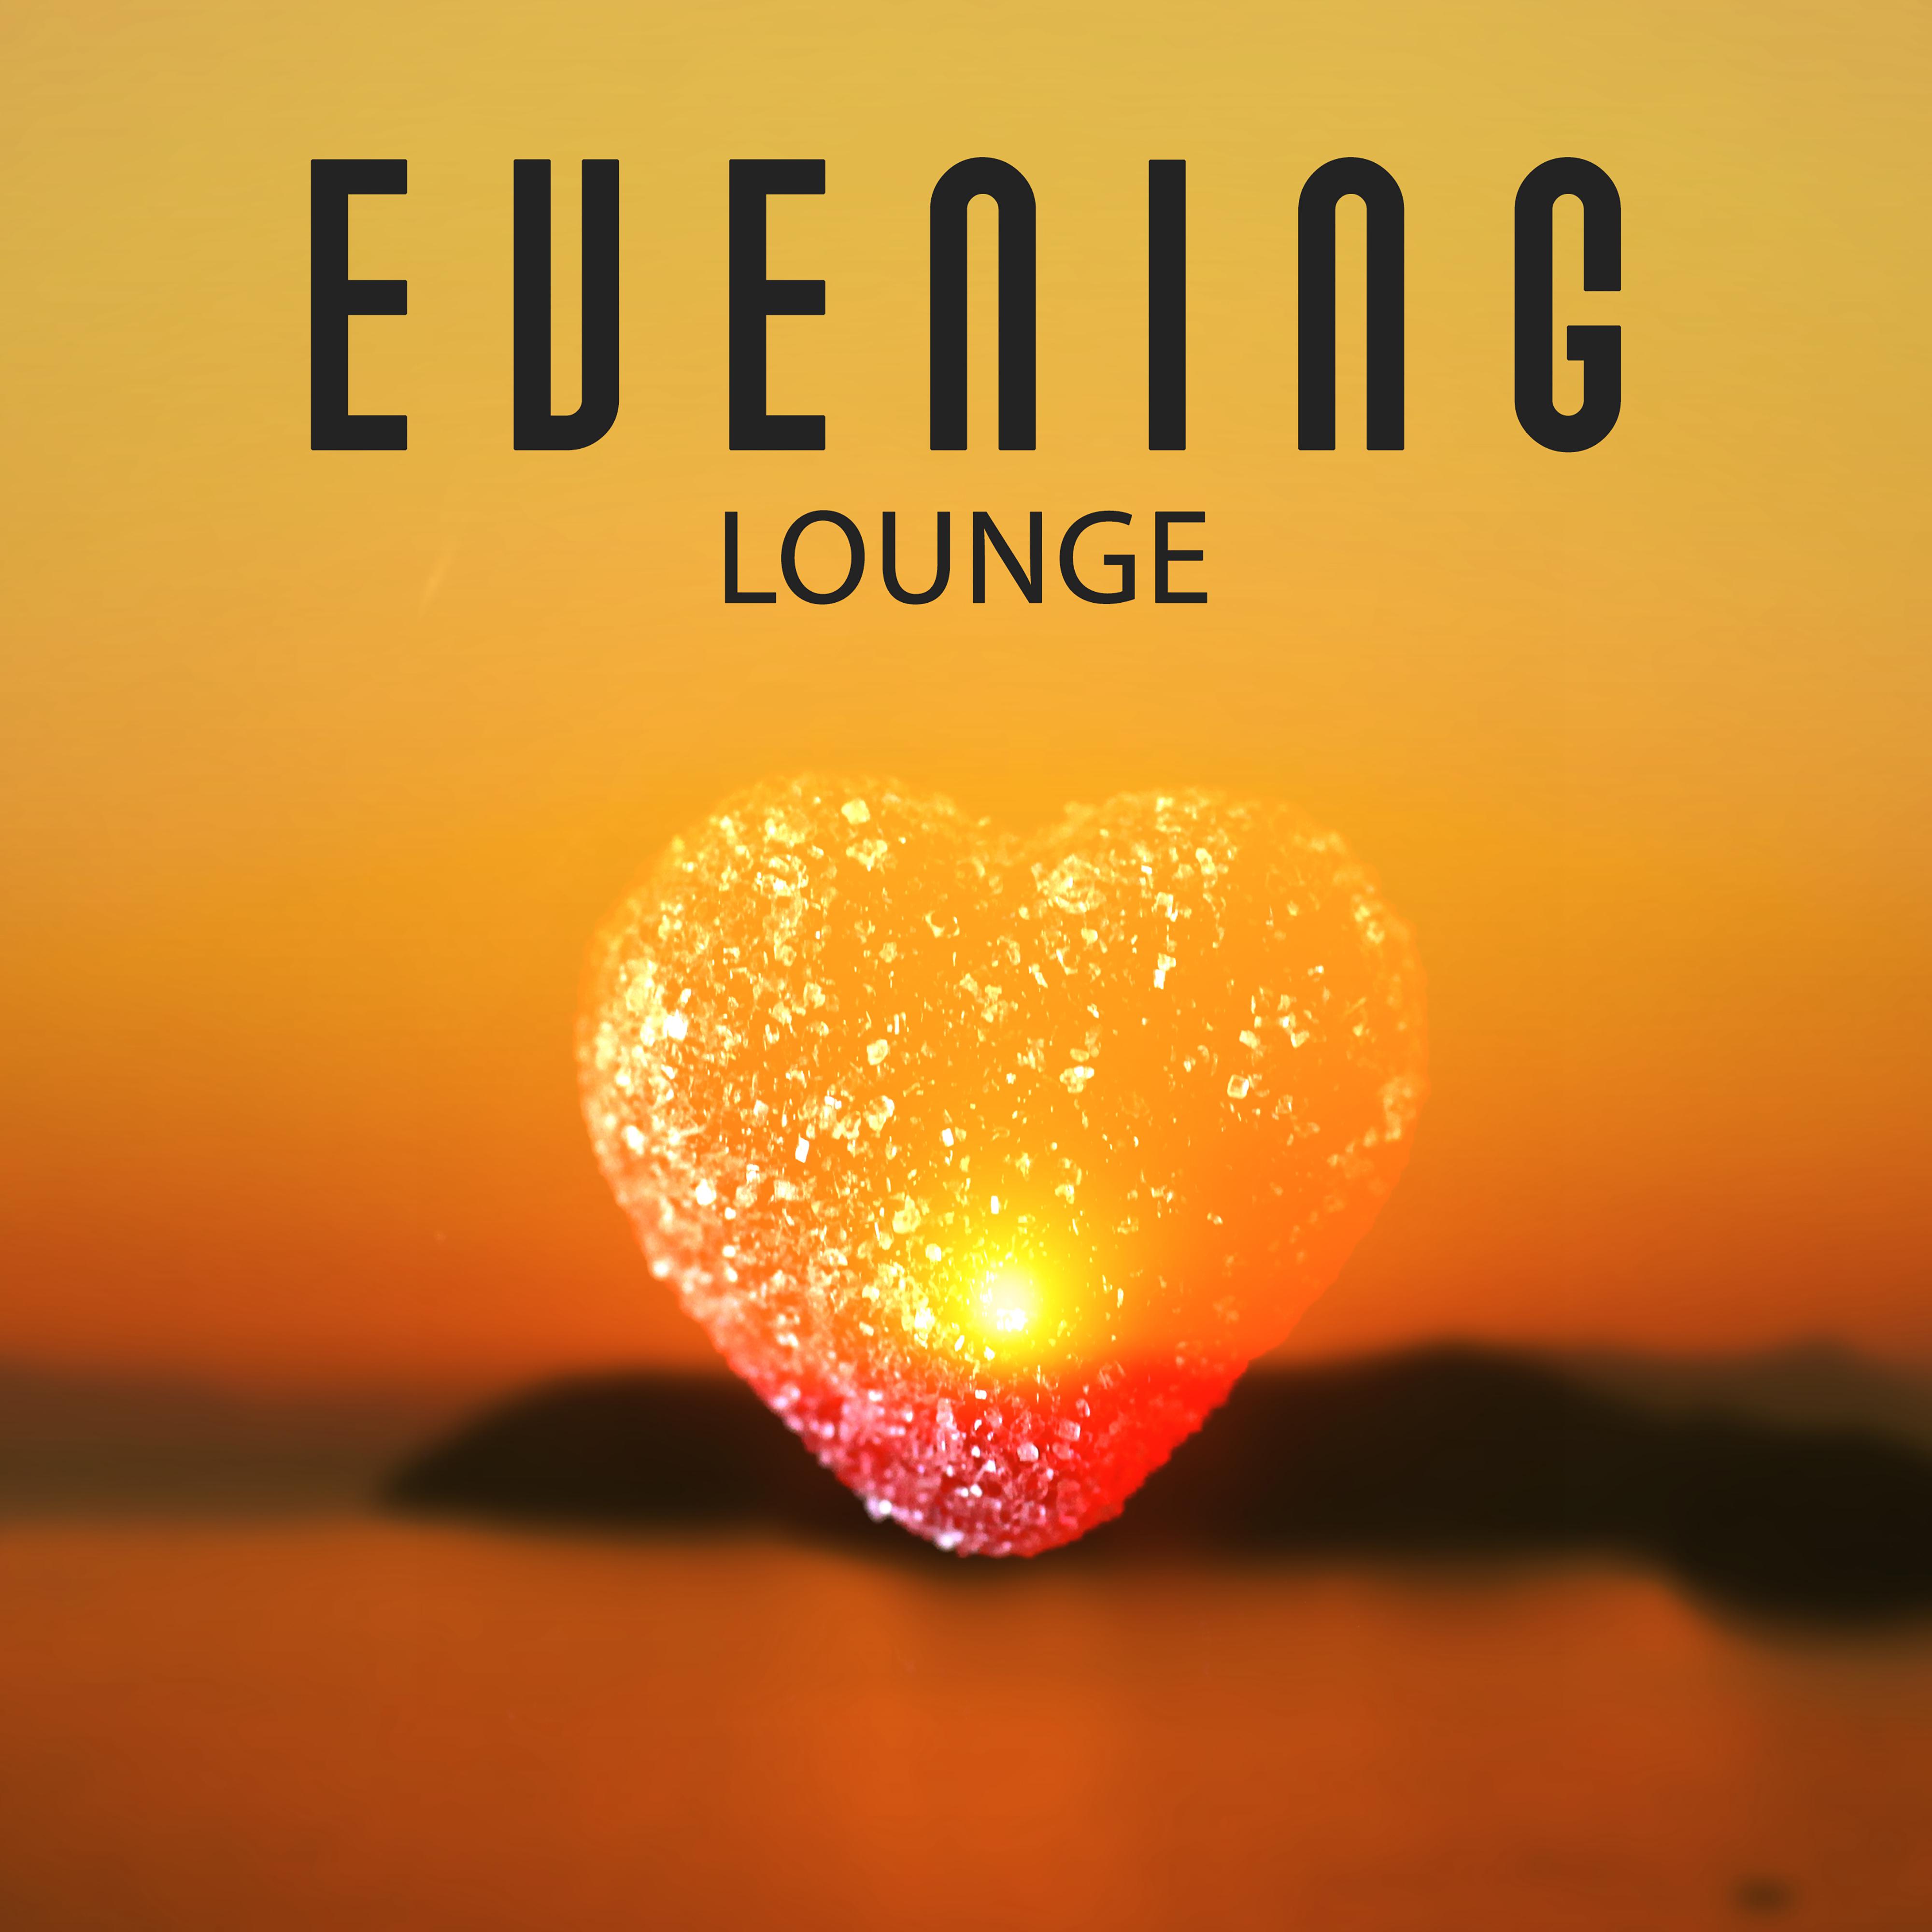 Evening Lounge – Soft Sounds to Relax, Jazz Piano, Romantic Music, Erotic Night, Moonlight Jazz